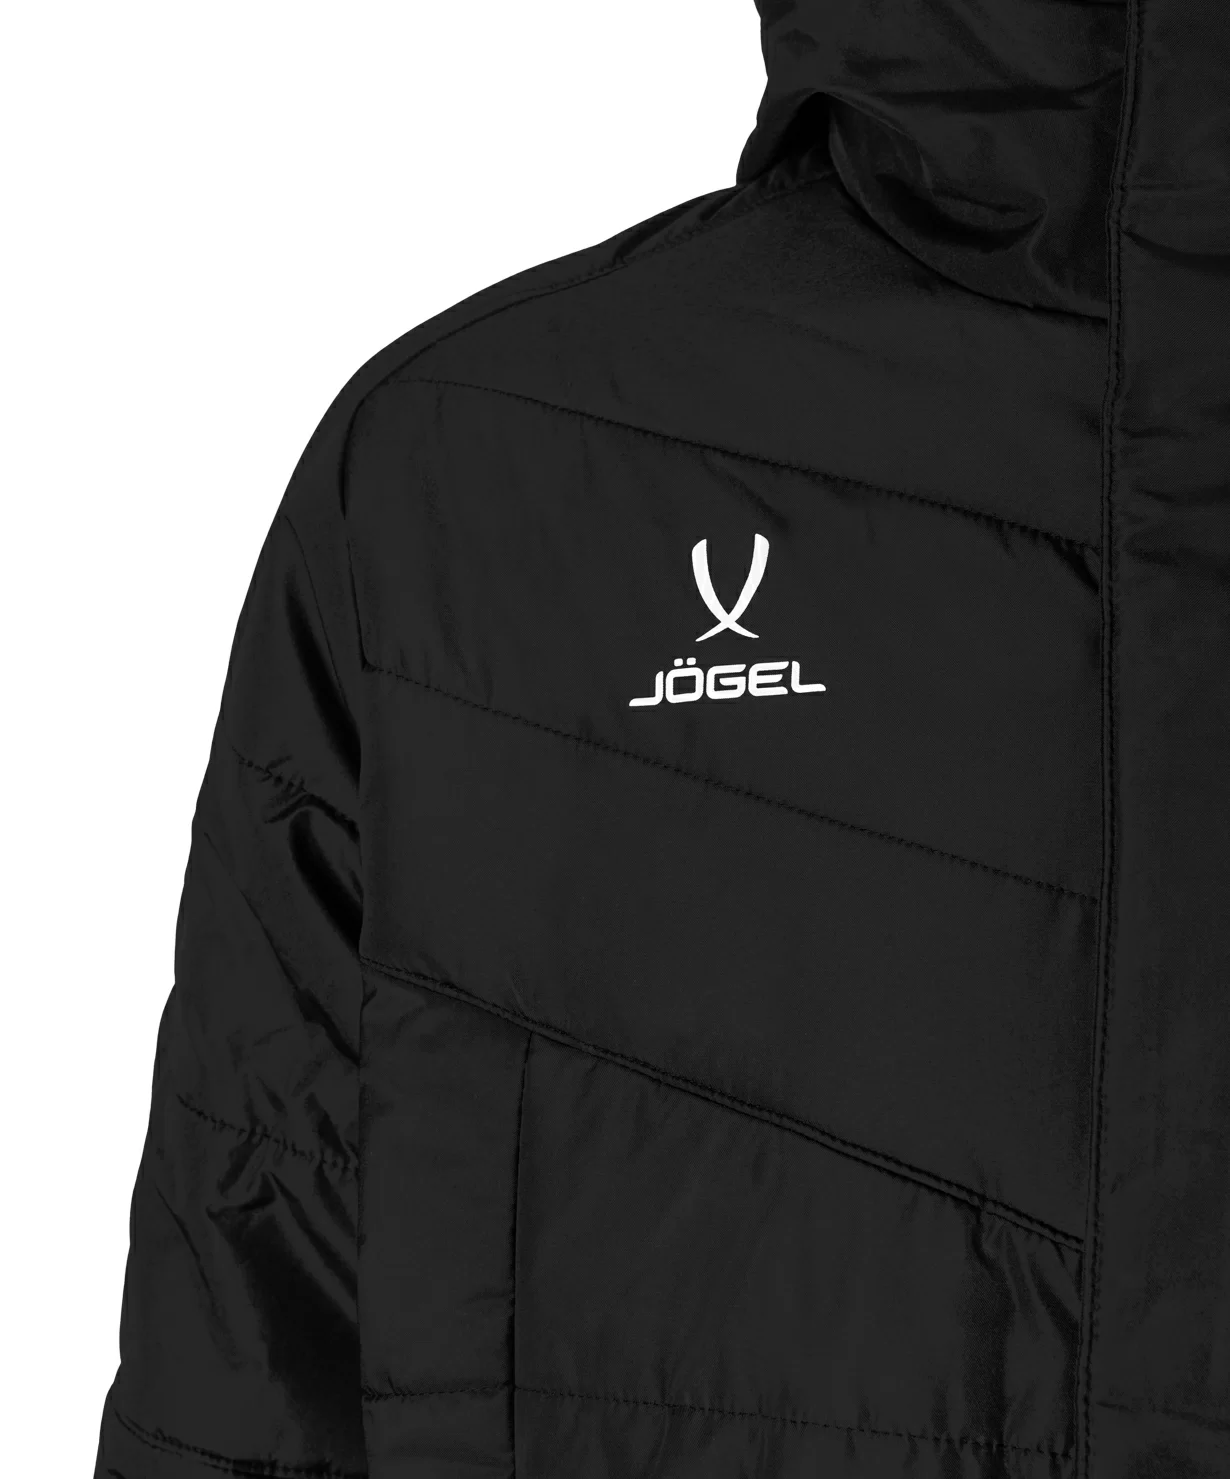 Фото Куртка утепленная CAMP Padded Jacket, черный со склада магазина СпортСЕ